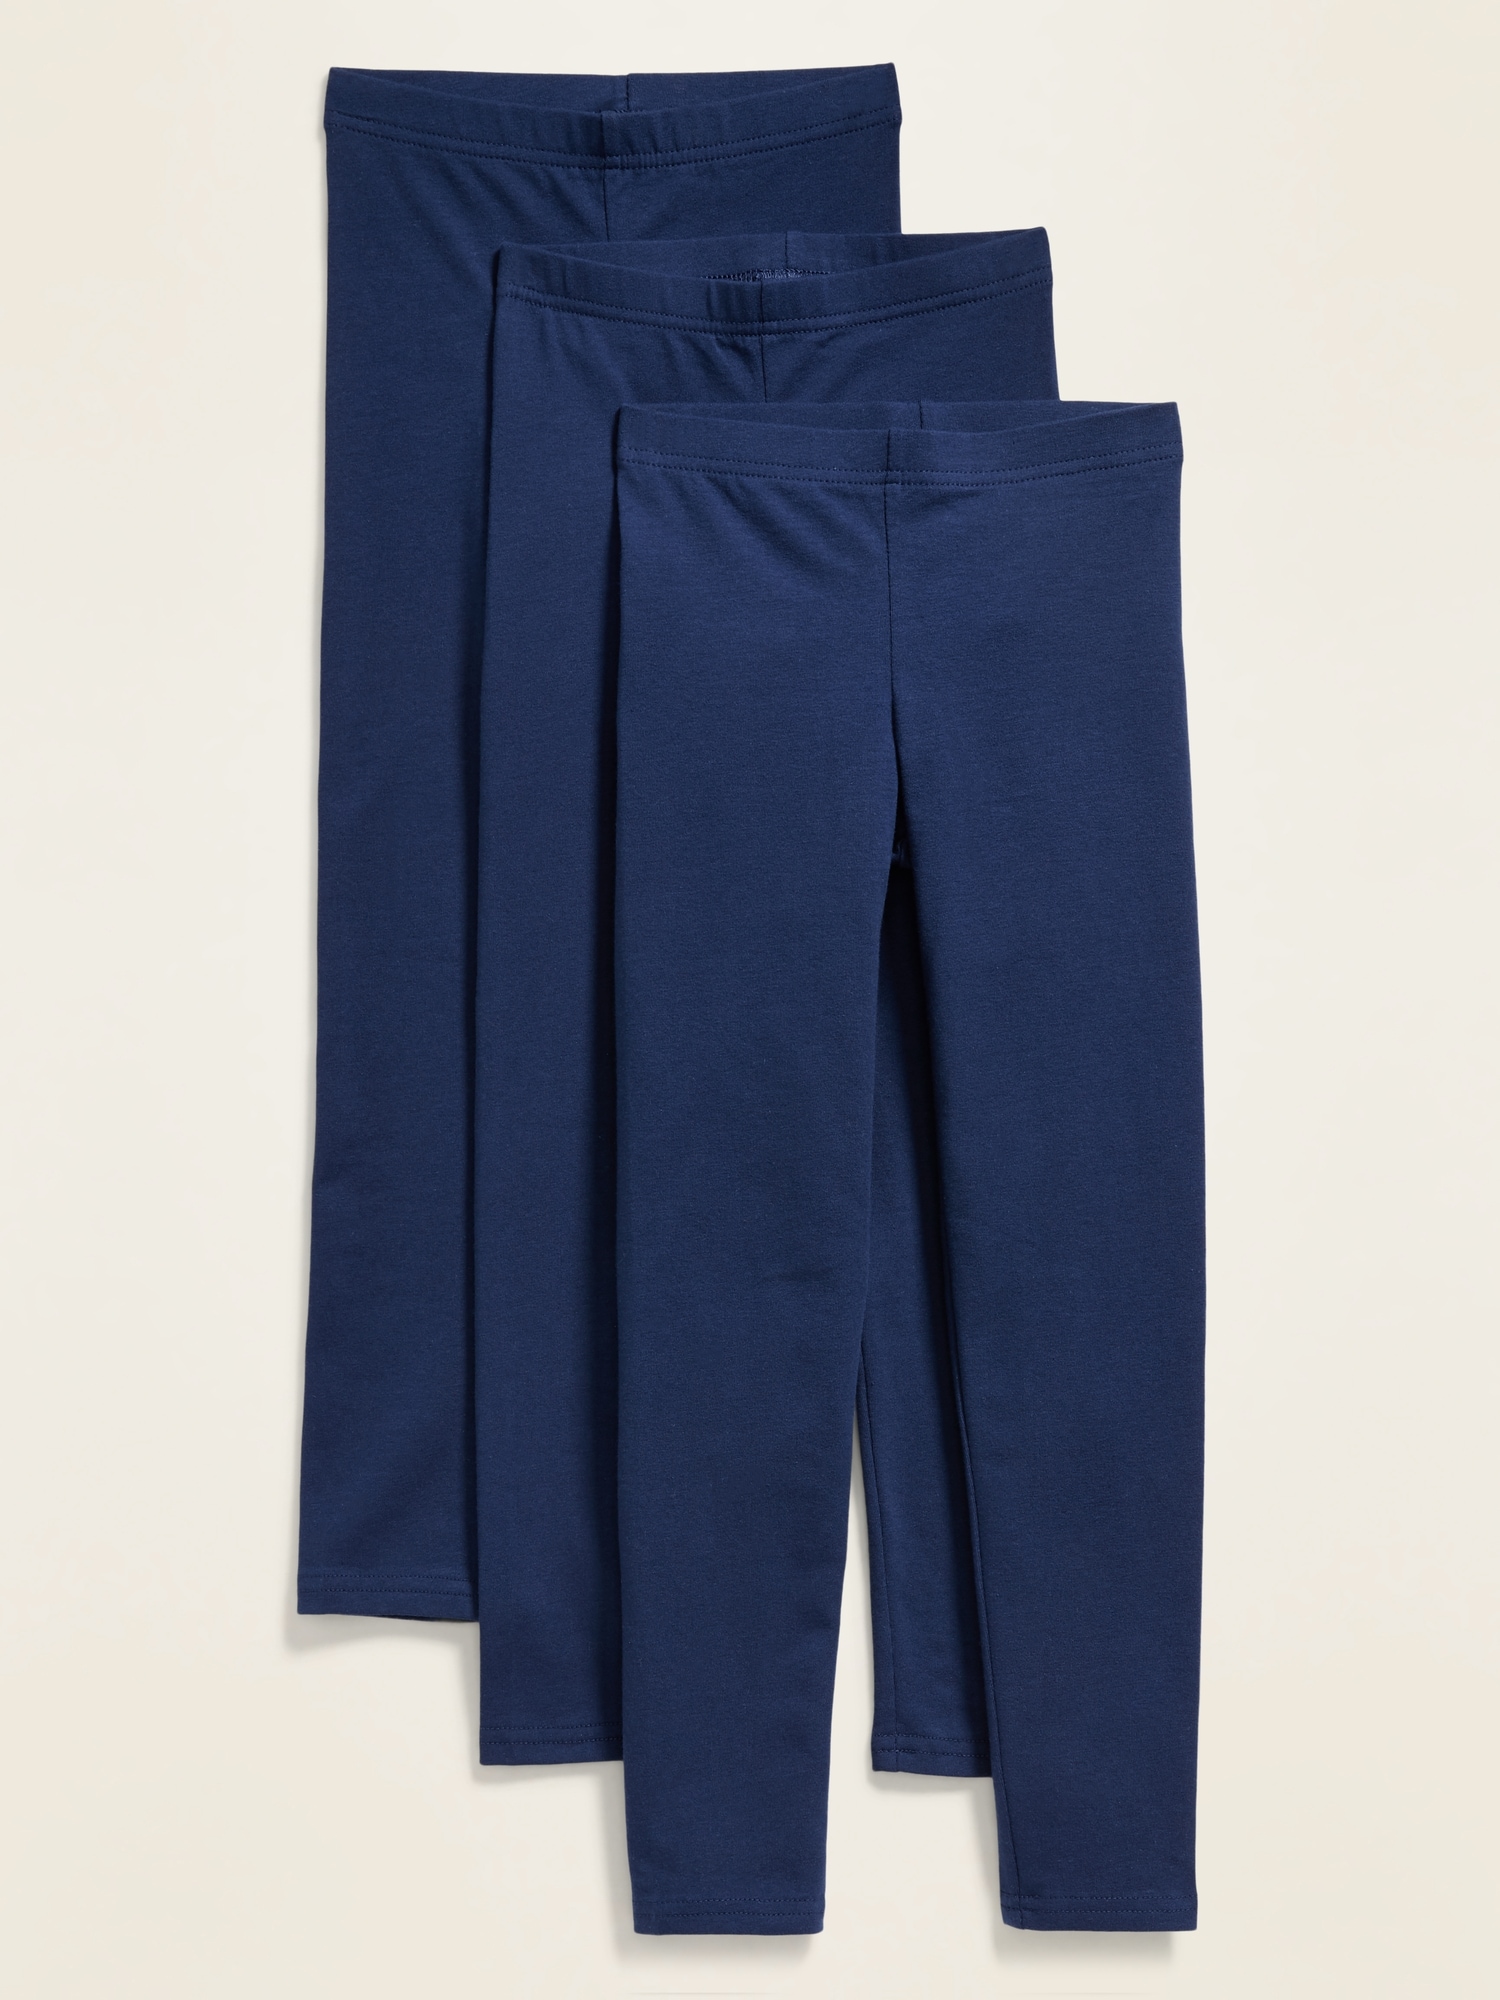 Old Navy Jersey Built-In Tough Leggings 3-Pack for Girls blue. 1